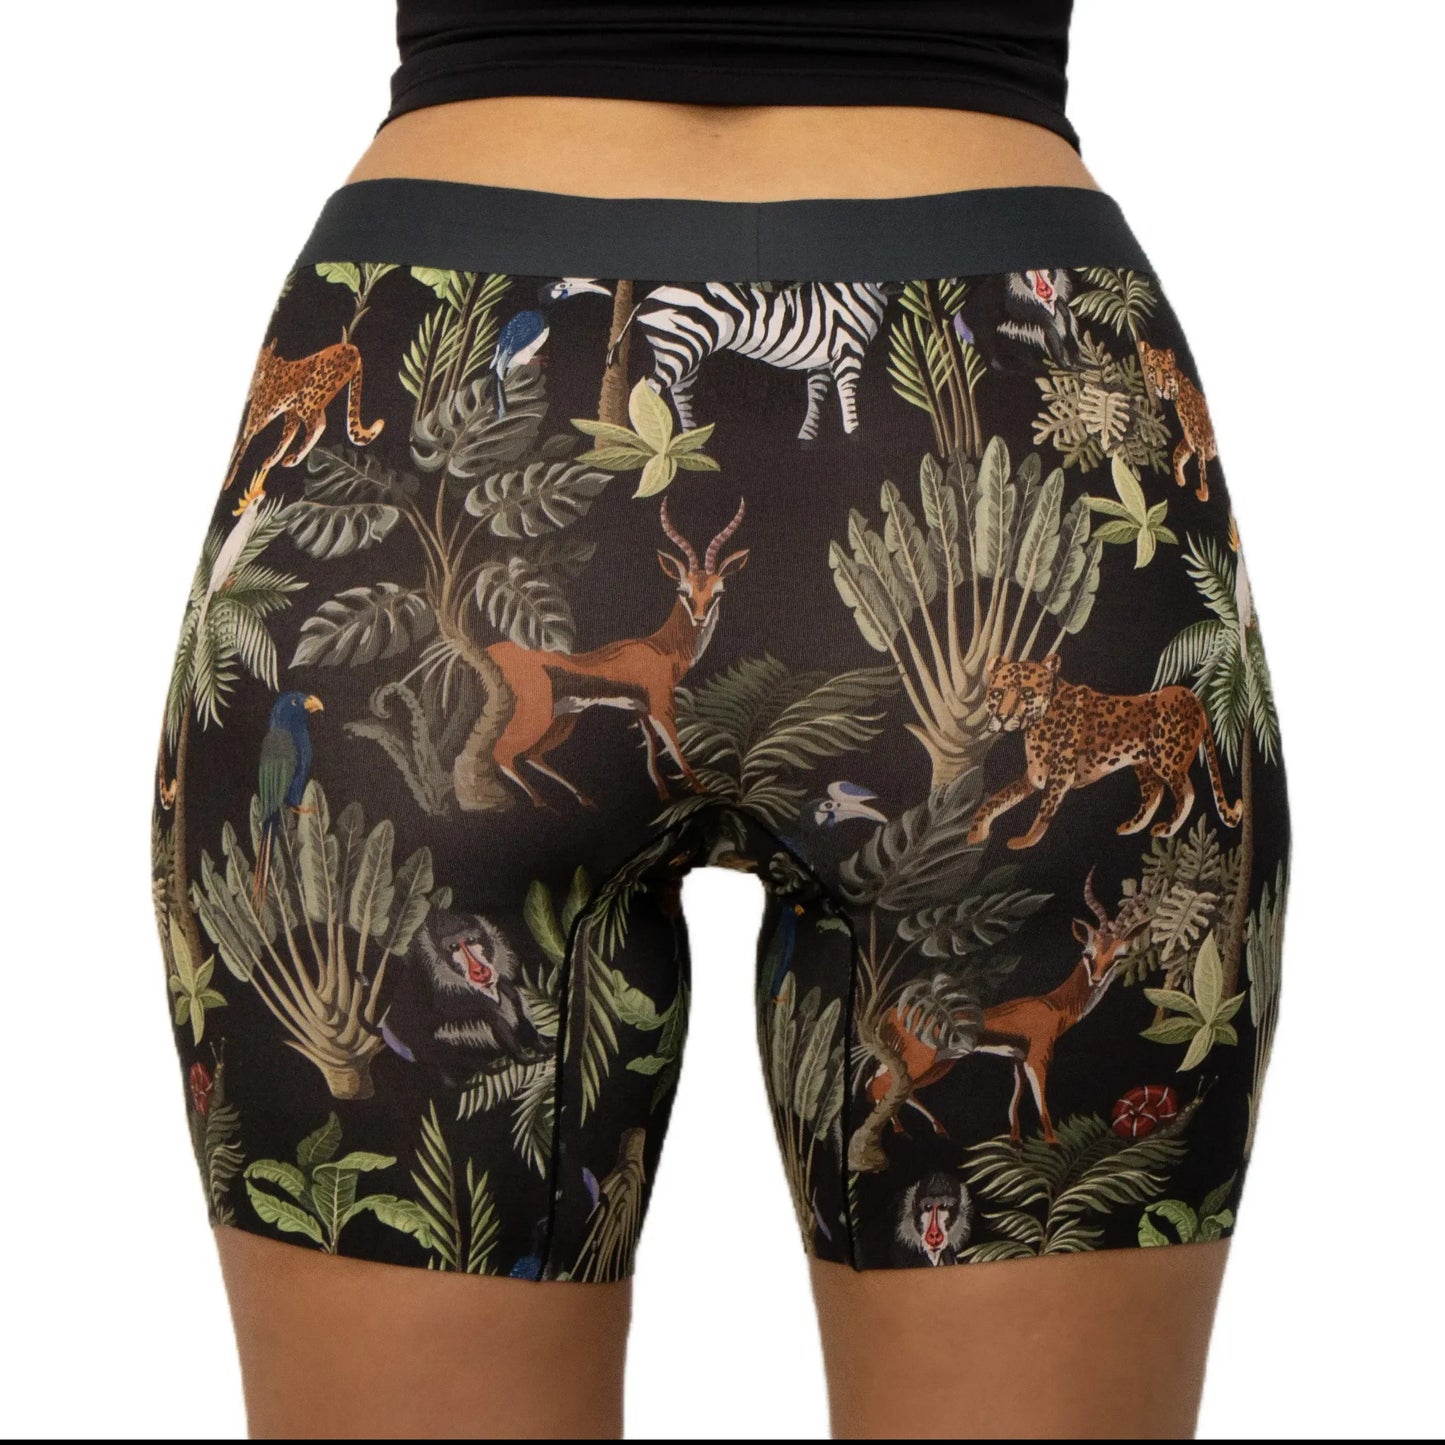 puresnug ladies' boxer briefs back view in wild jungle print